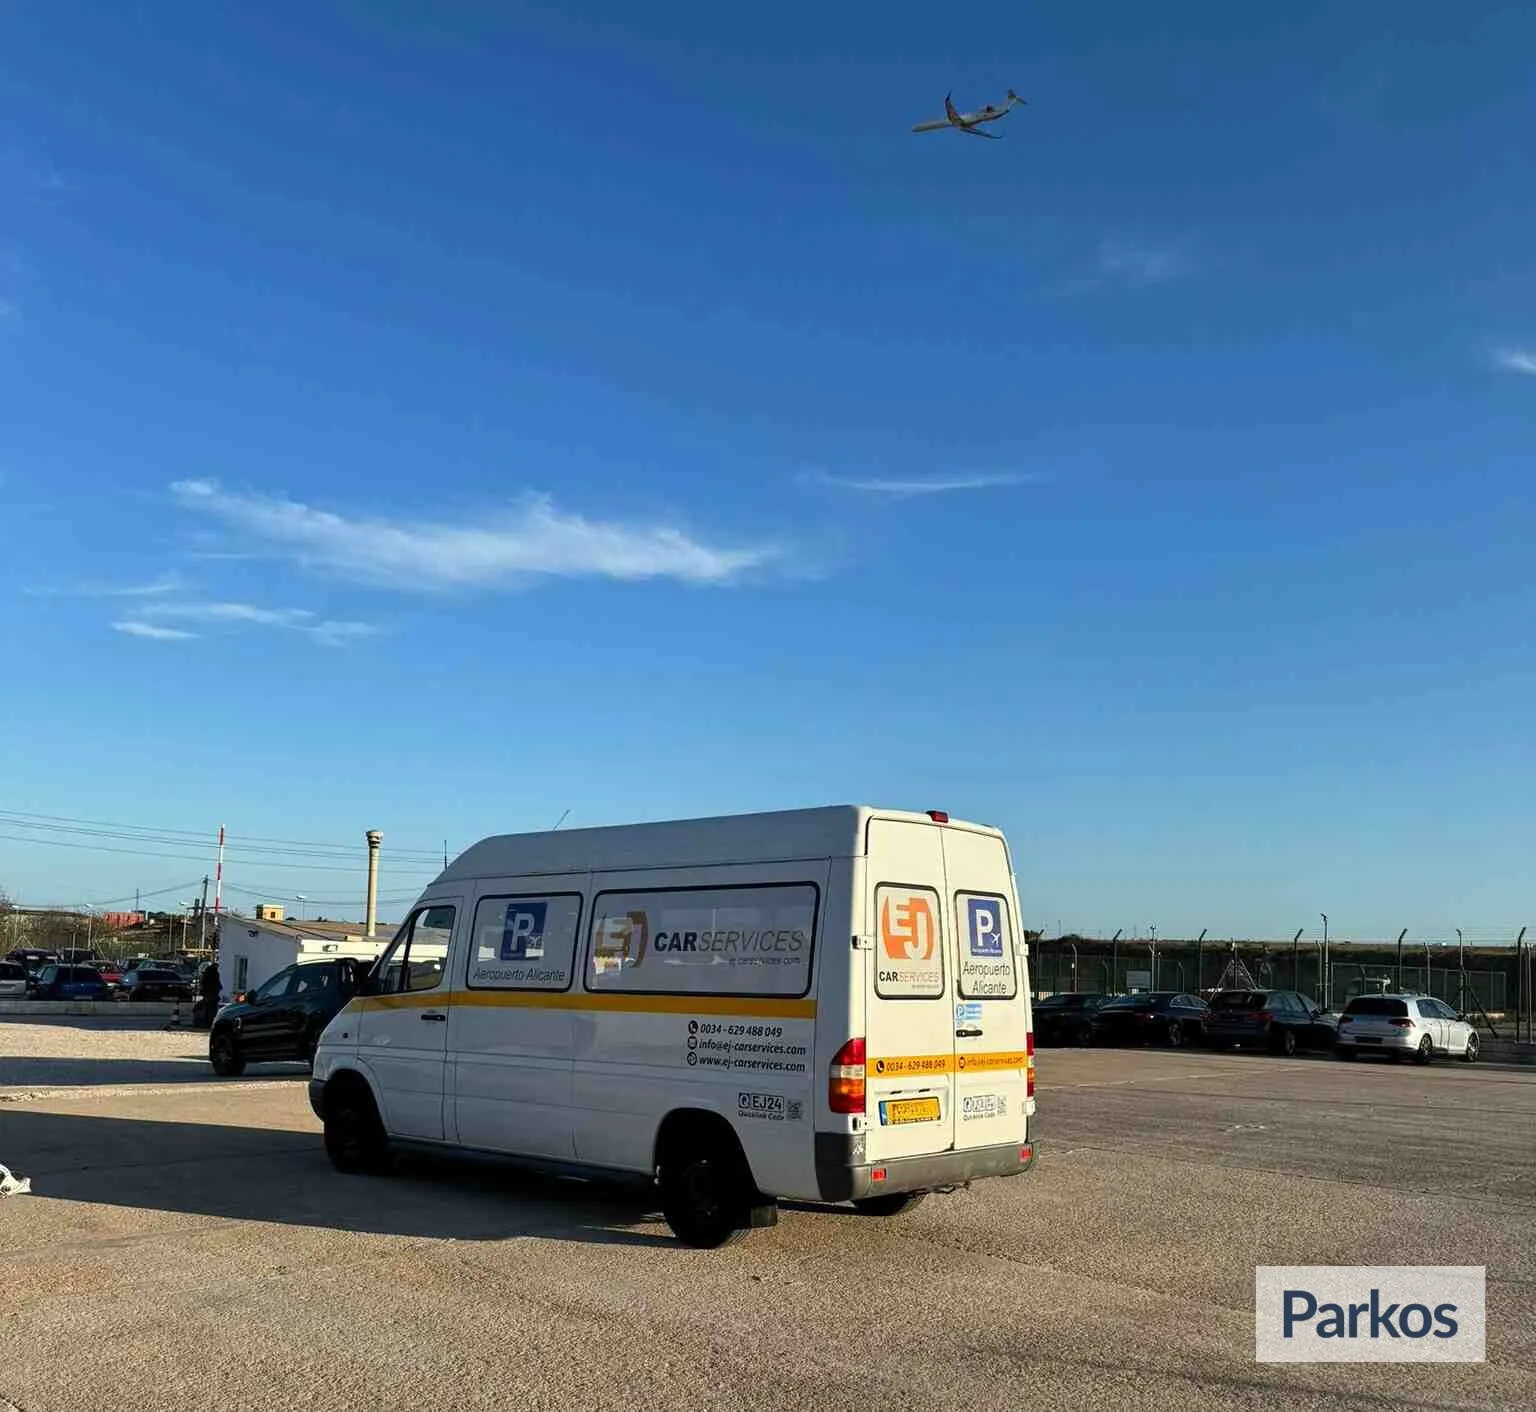 EJ Carservices - Parking Aeropuerto Alicante - picture 1